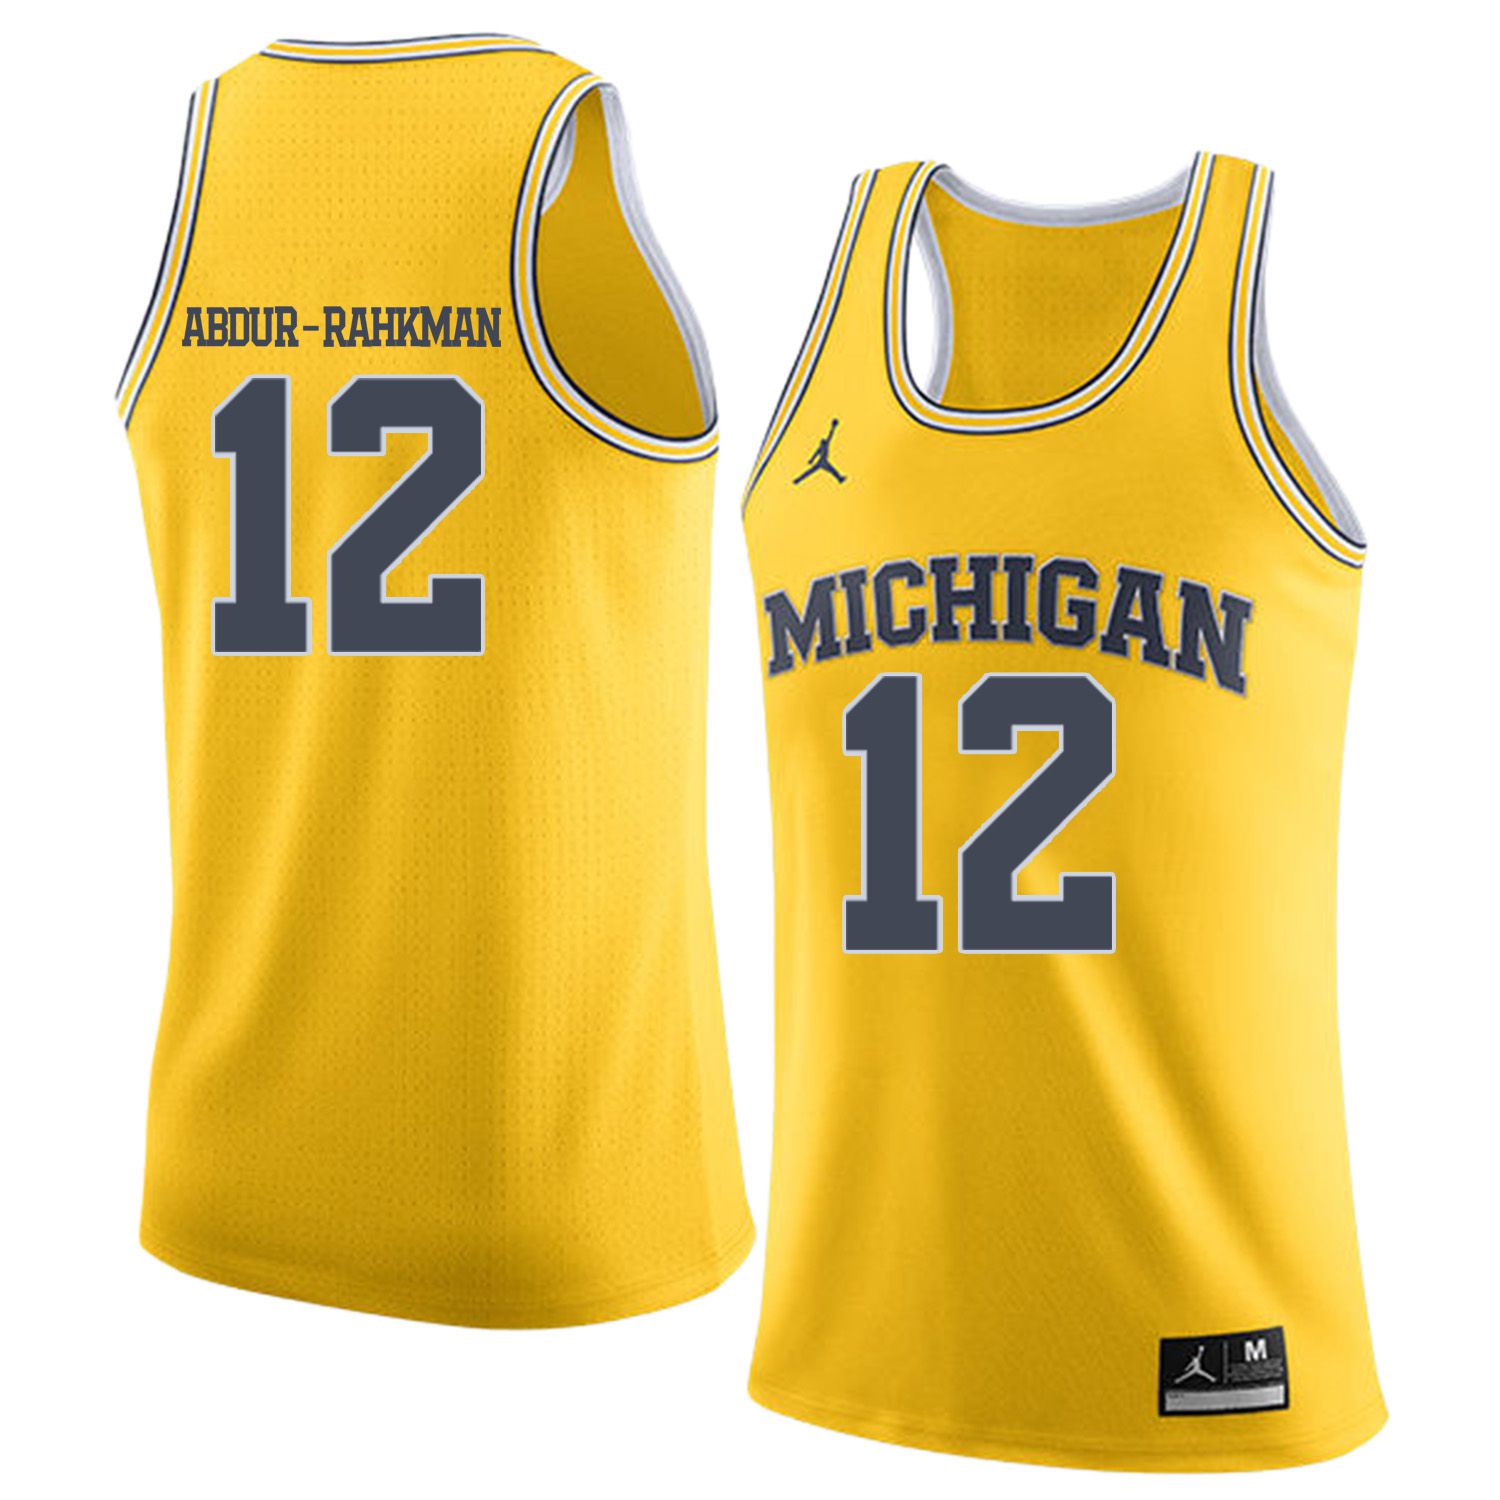 Men Jordan University of Michigan Basketball Yellow 12 Abdur-Rahkman Customized NCAA Jerseys